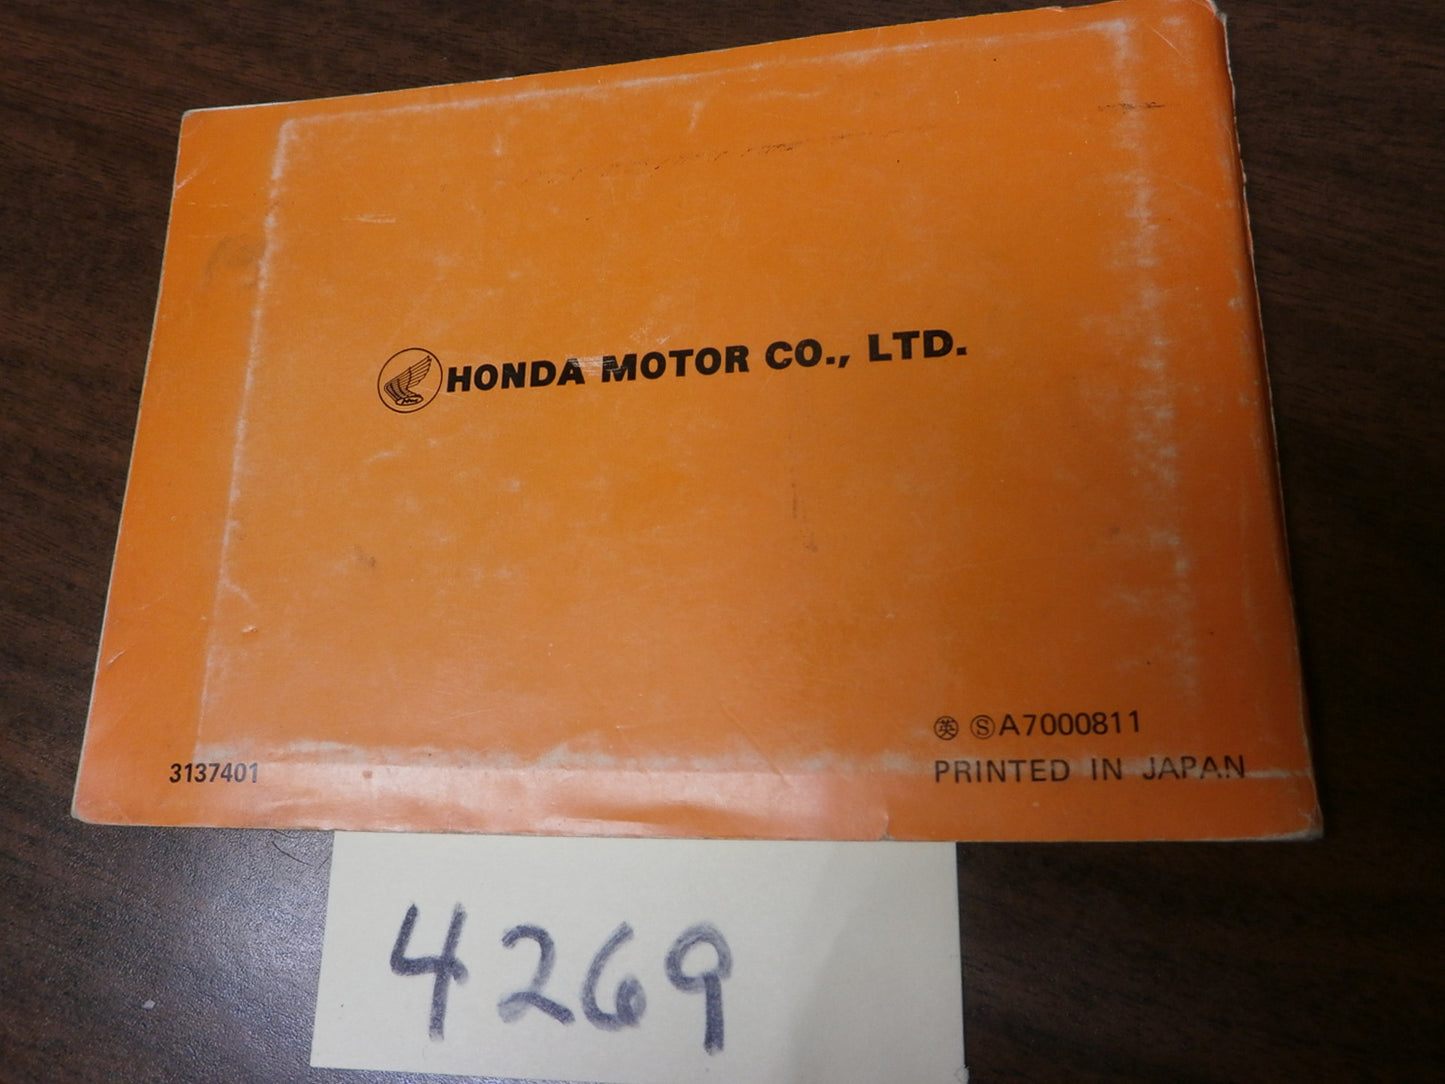 Honda CB550K0 Owners manual 4269